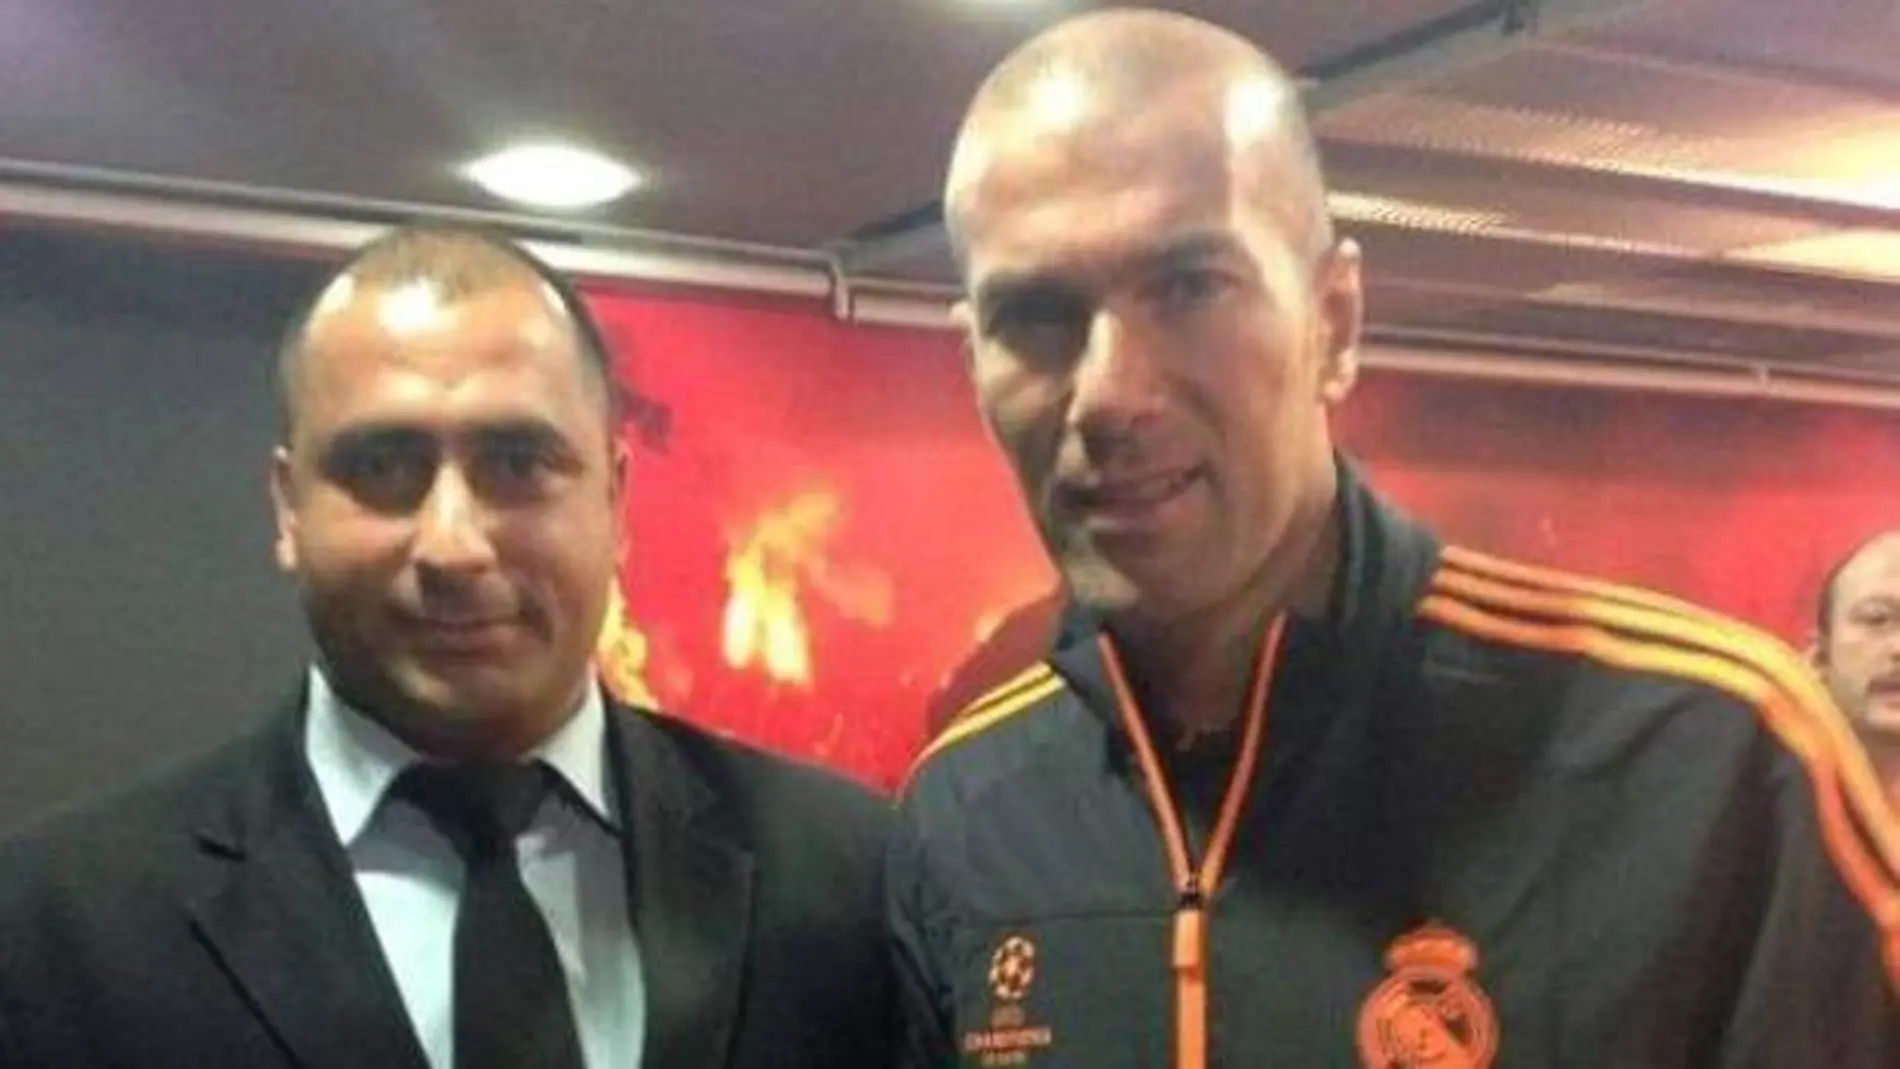 Fatih Çakmak, junto a Zidane, en la visita del Madrid a Estambul en septiembre de 2013